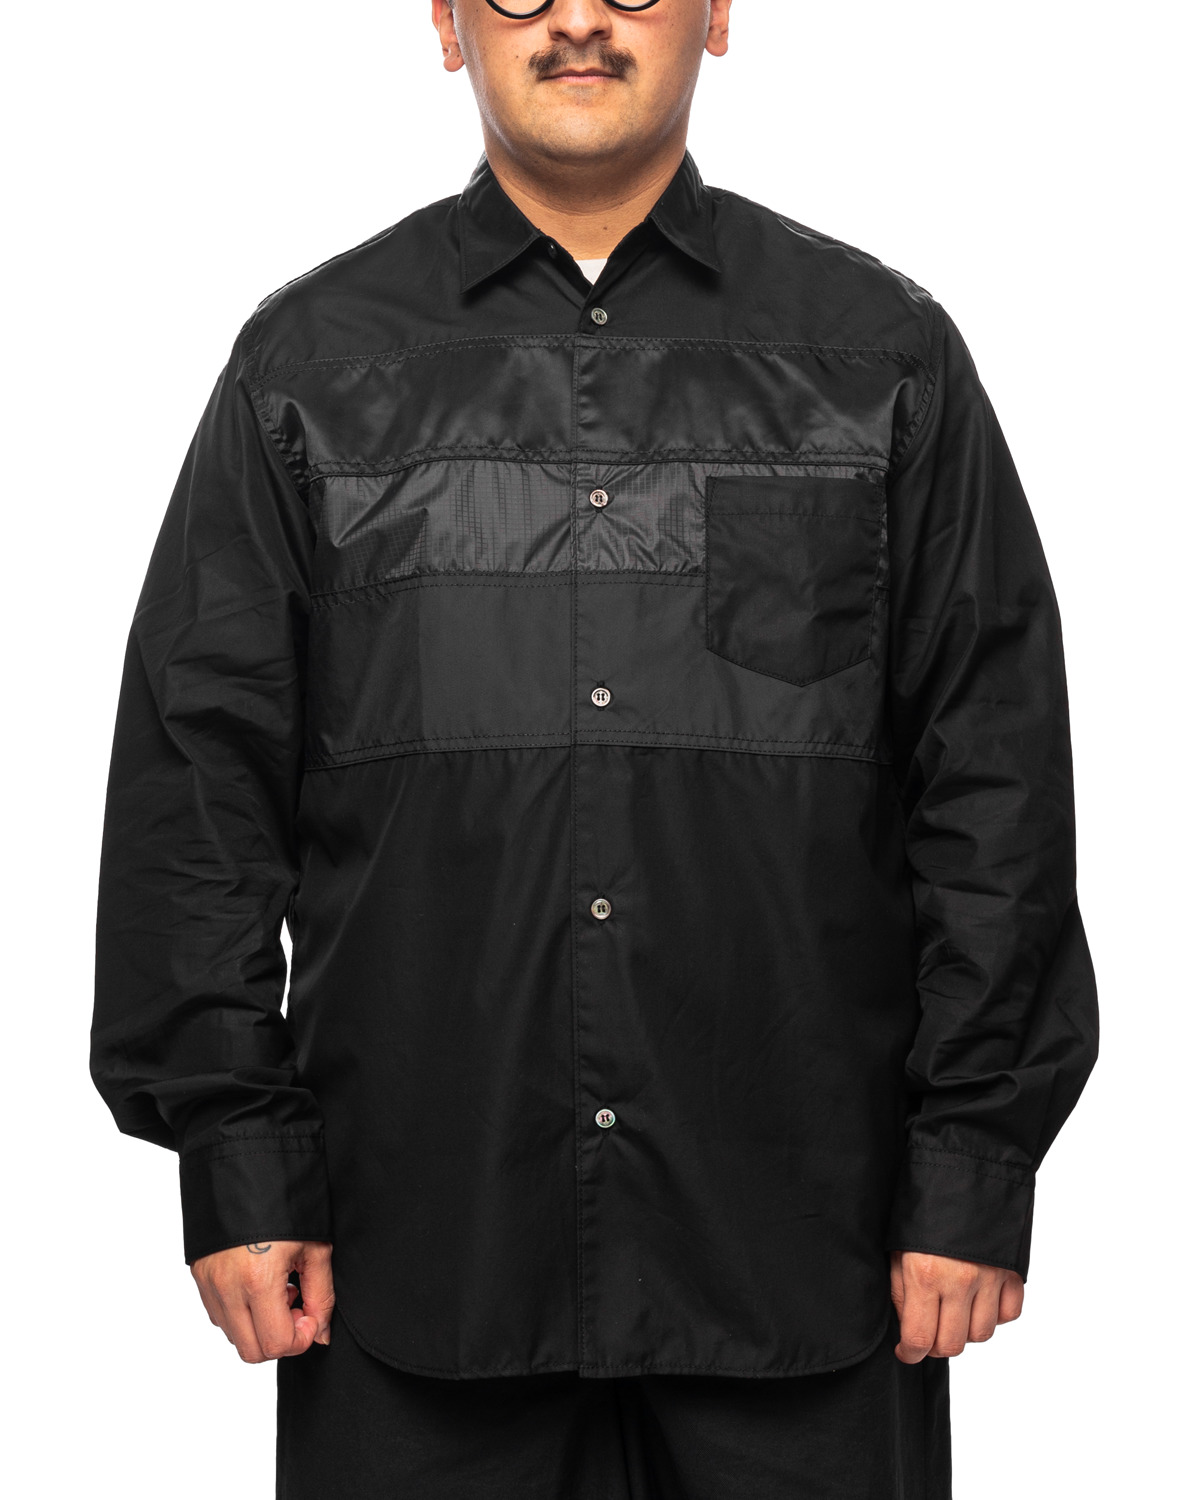 Men's Shirt Black Multi Fabric Mix HL-B001-051 - 1